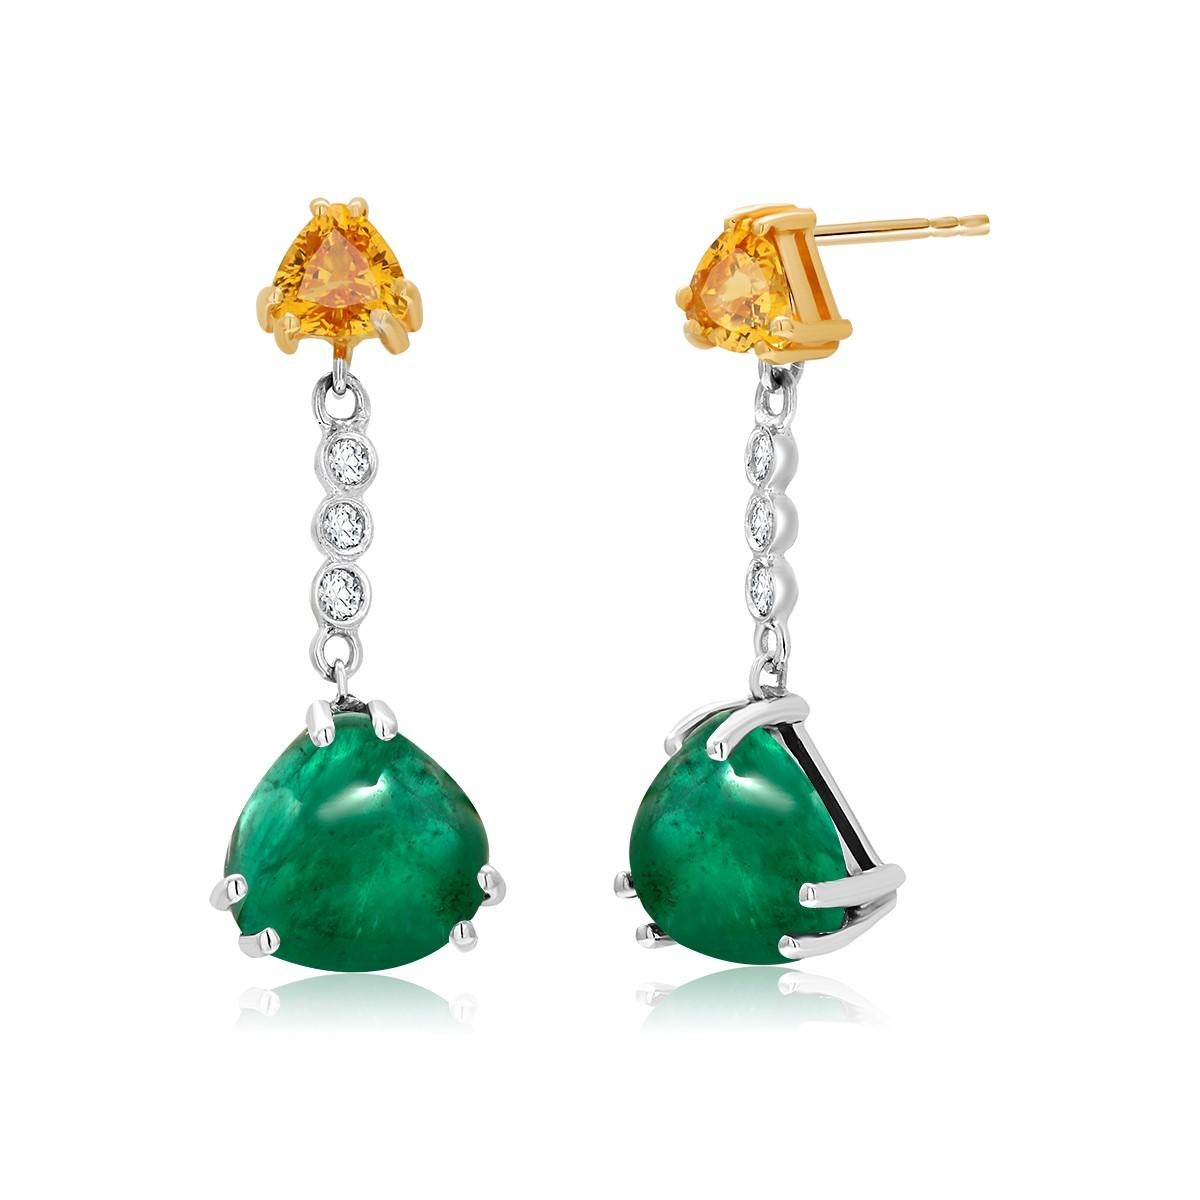 Trillion Cut Cabochon Emerald Yellow Sapphire Diamond Gold Earrings Weighing 5.81 Carat